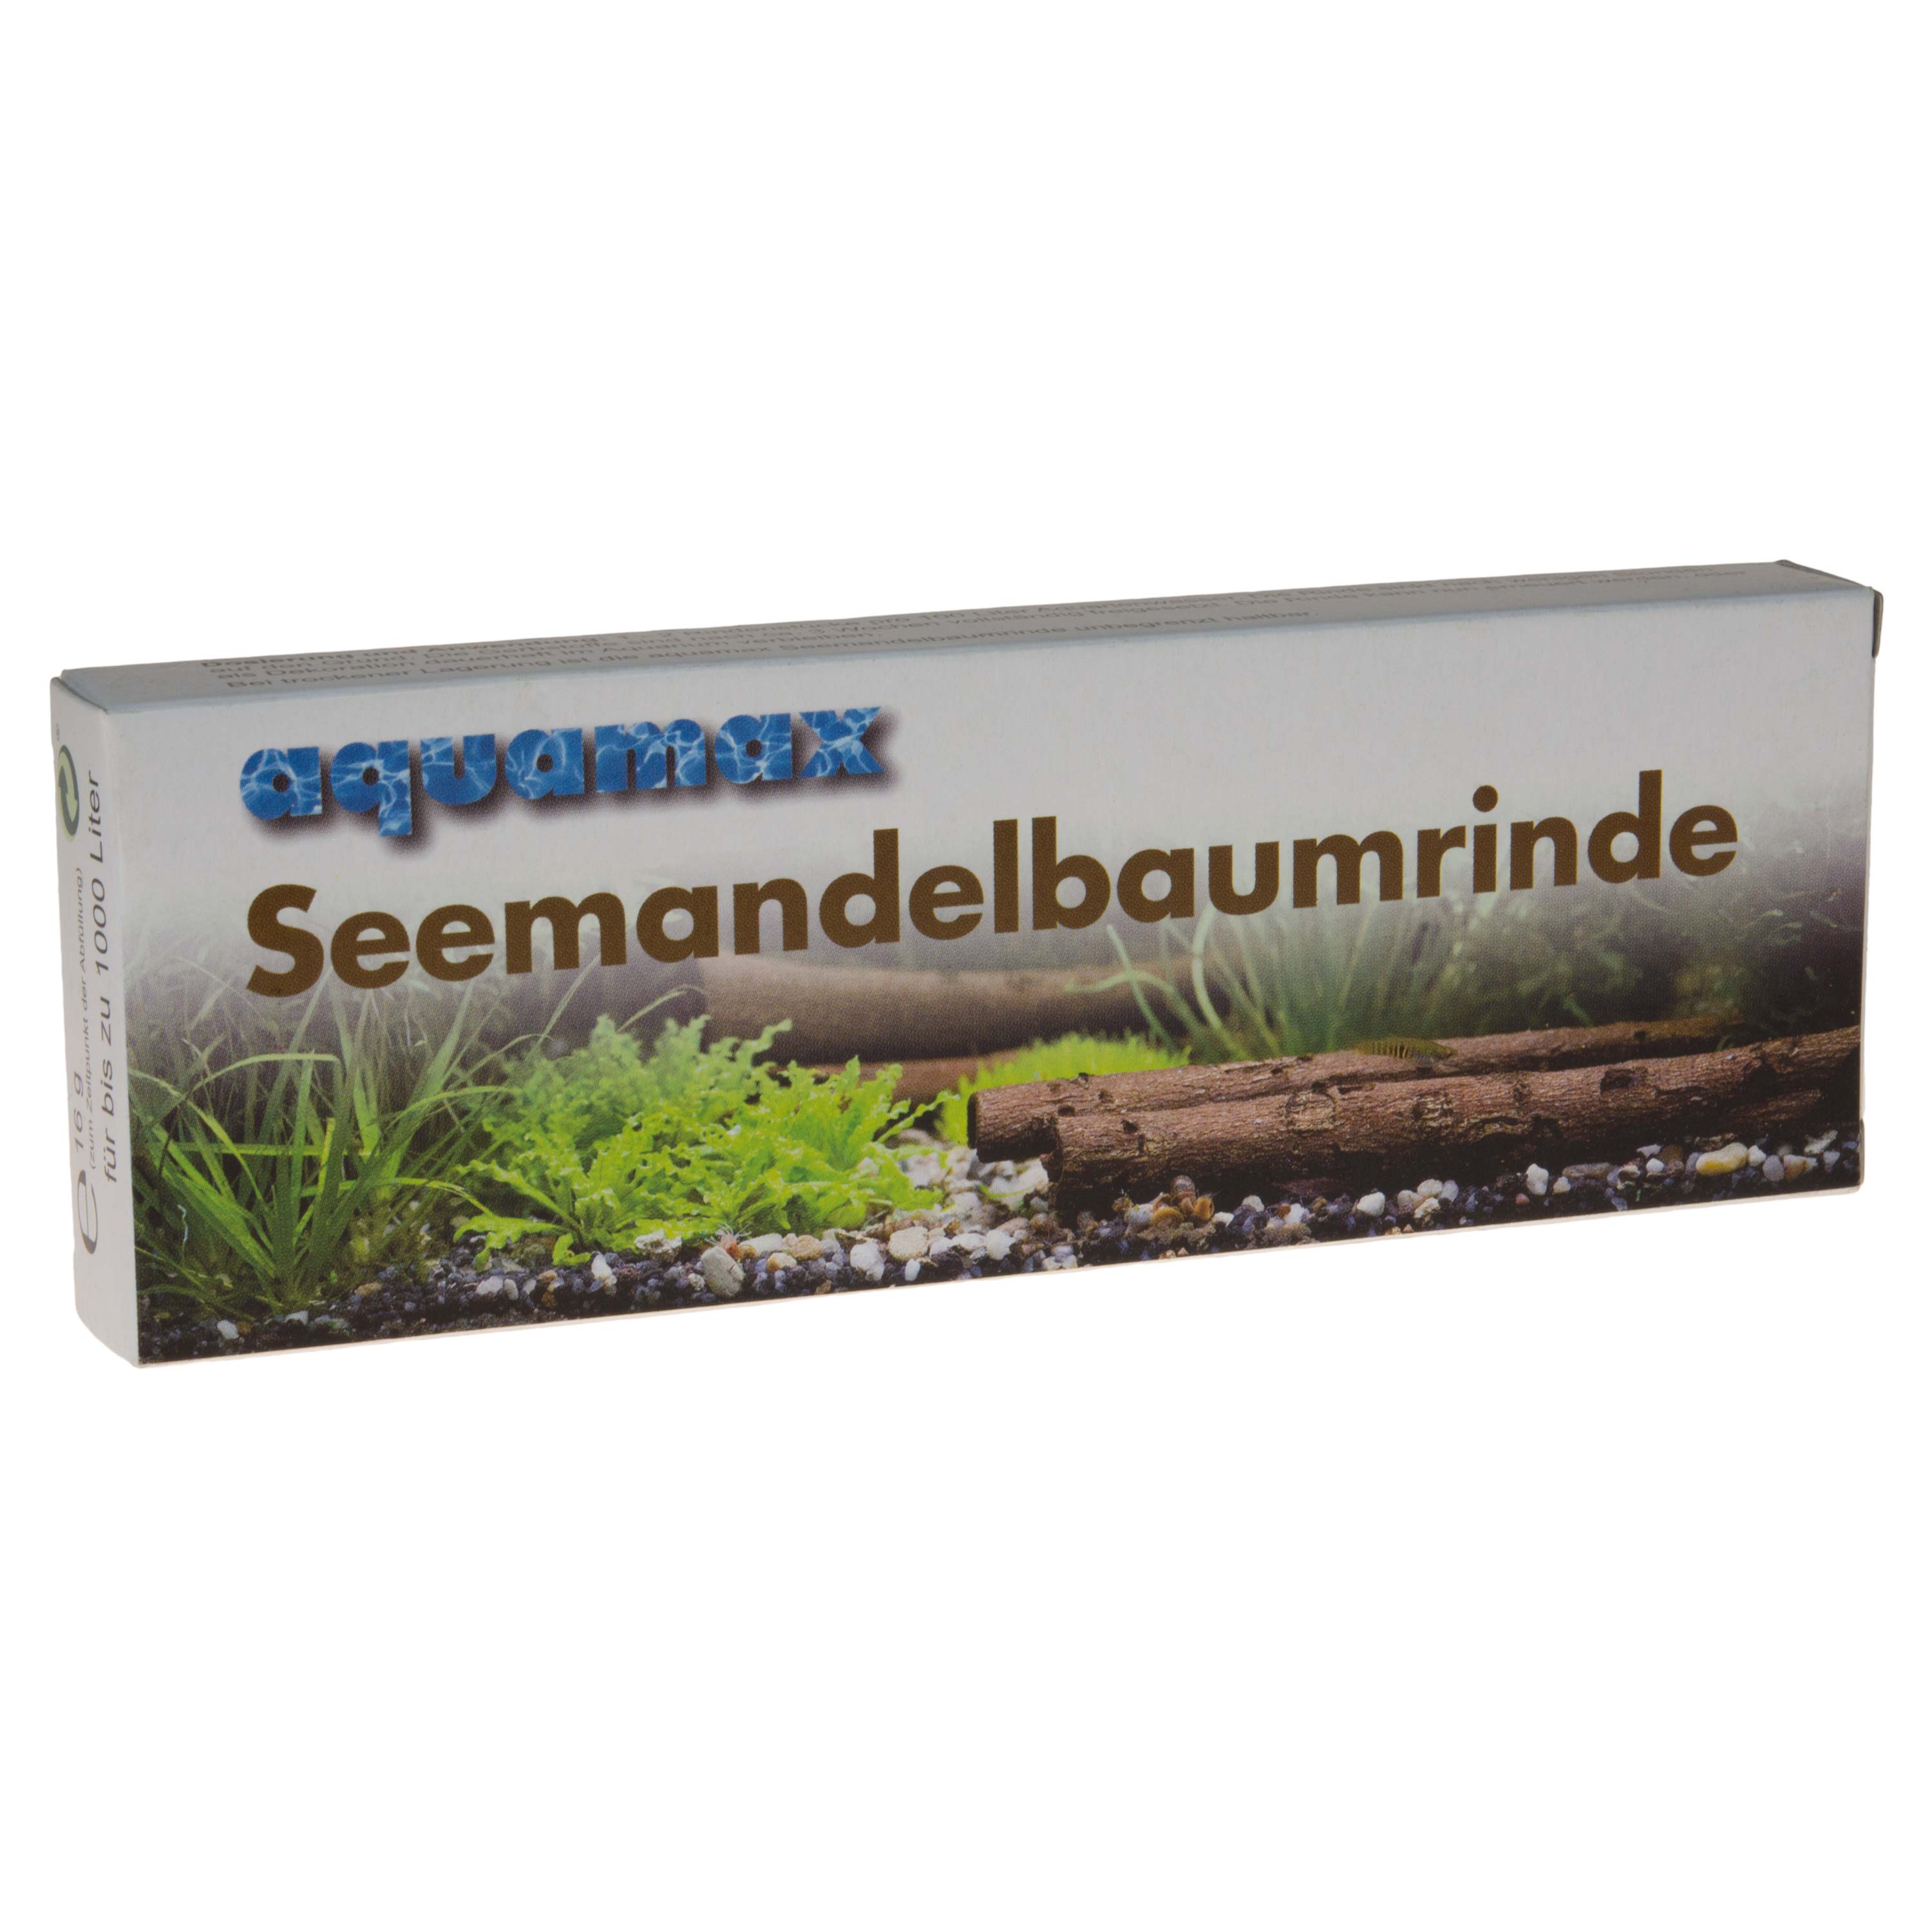 Standard Tropical Almond Bark aquamax